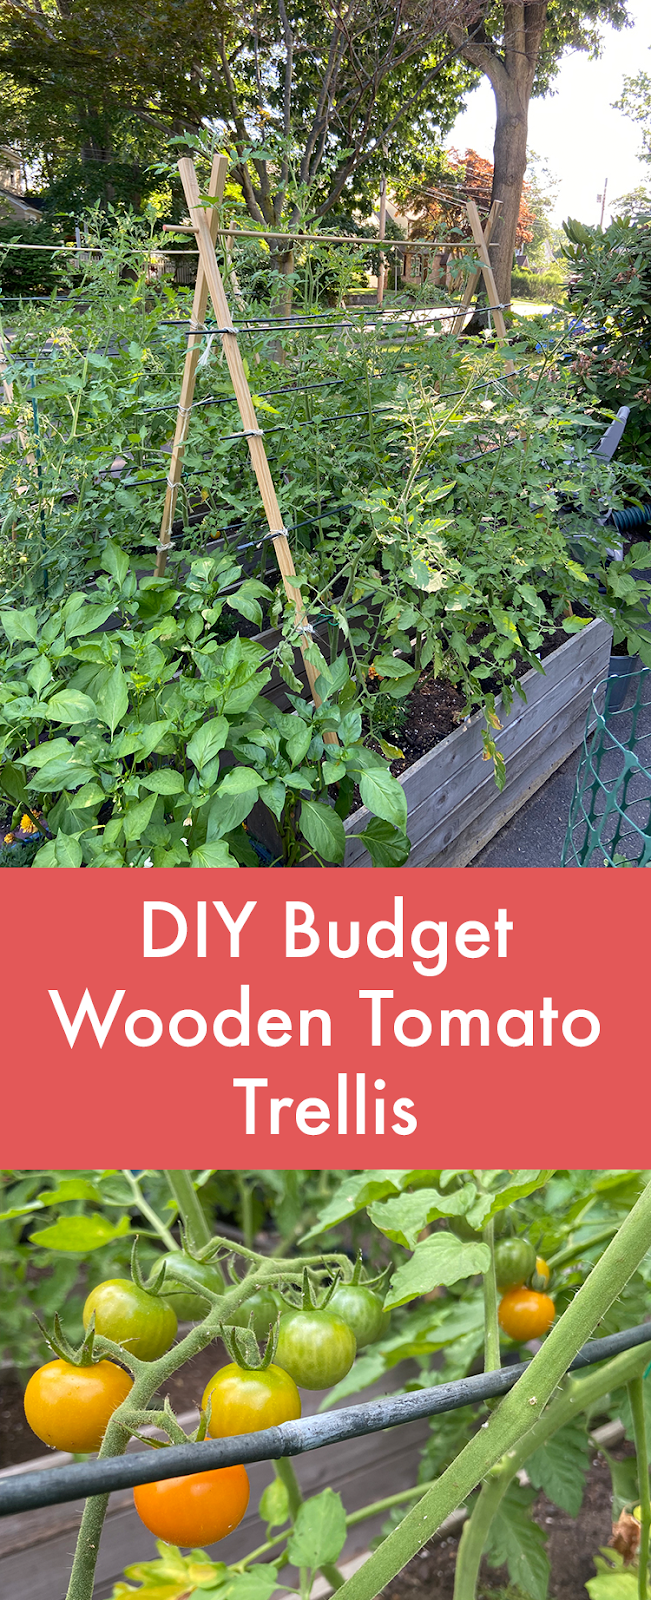 In Color Order: Tutorial: DIY Budget Wooden Tomato Trellis